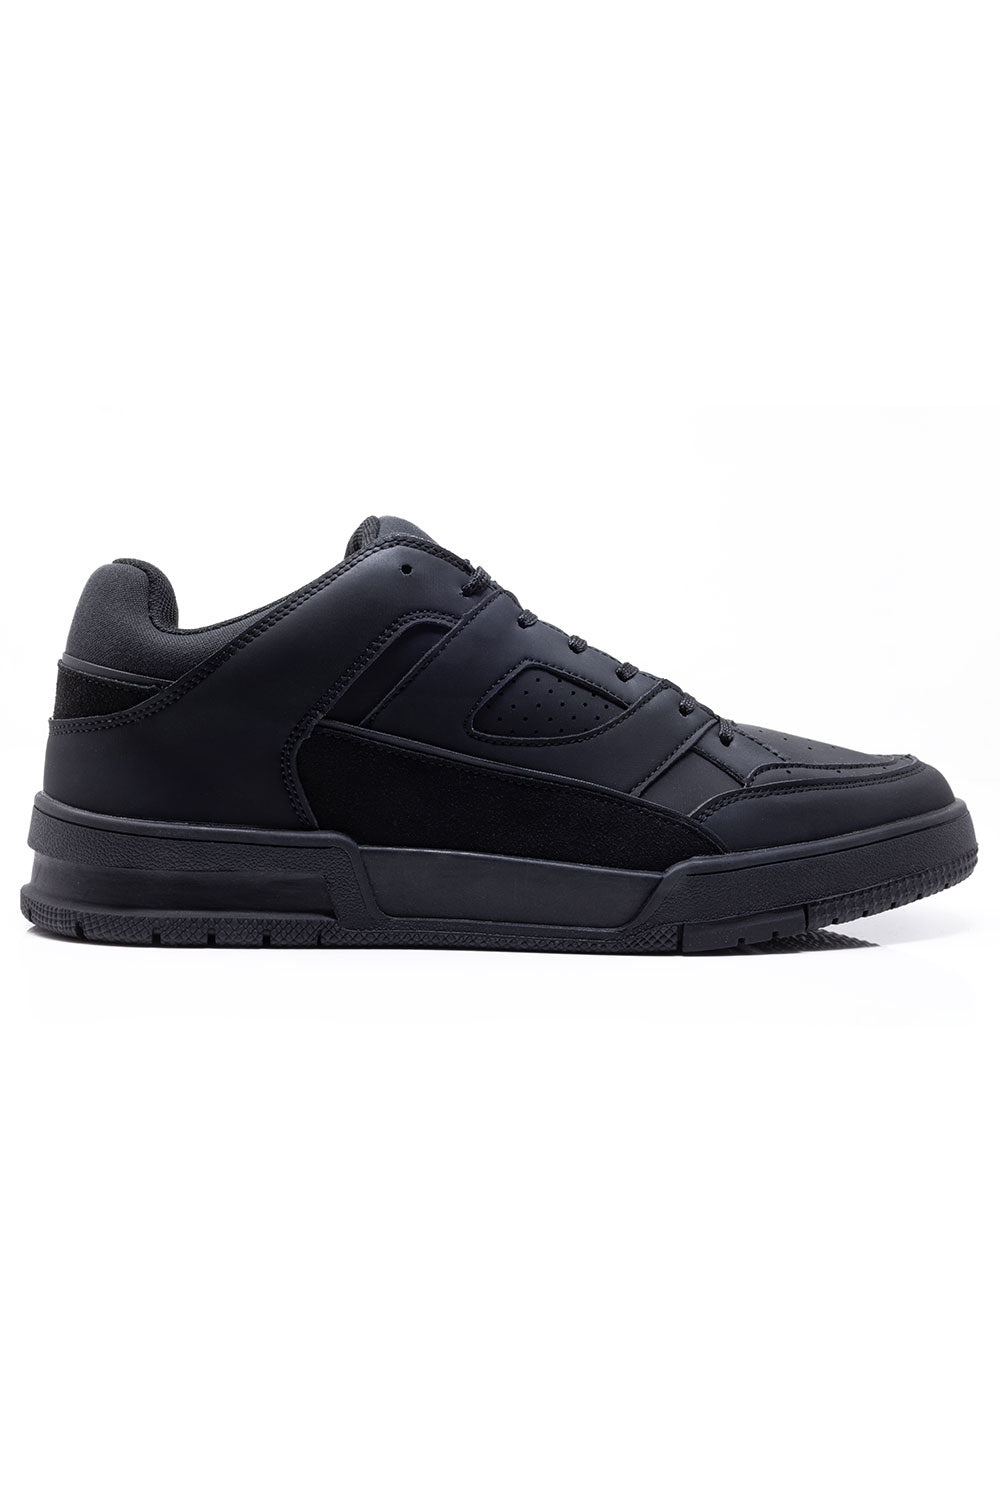 Barabas Men's Premium Running Multicolor Leather Sneakers 4SK01 Black